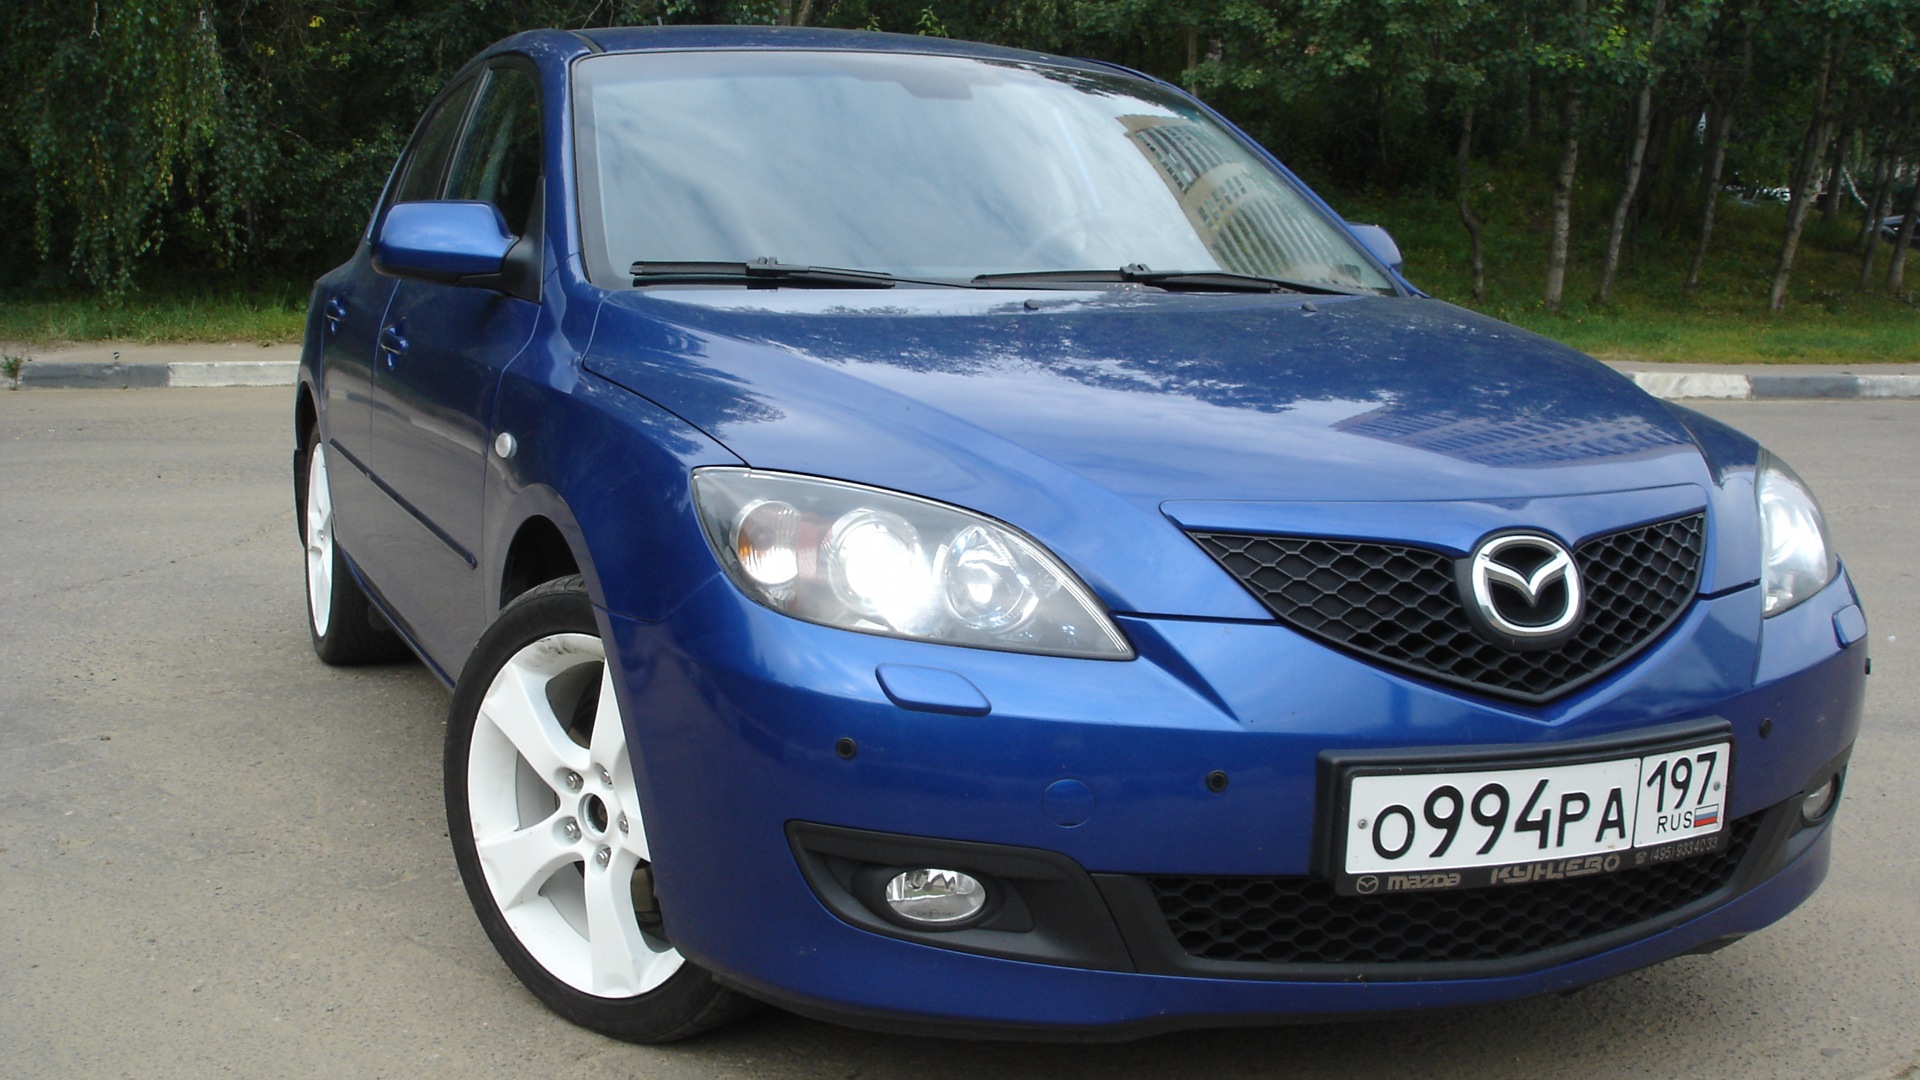 Mazda 3 drive. Мазда 3 хэтчбек 2007 серая. Мазда 3 3 2007. Мазда 3 2007 серая. Мазда 3 седан 1.6л 2007.